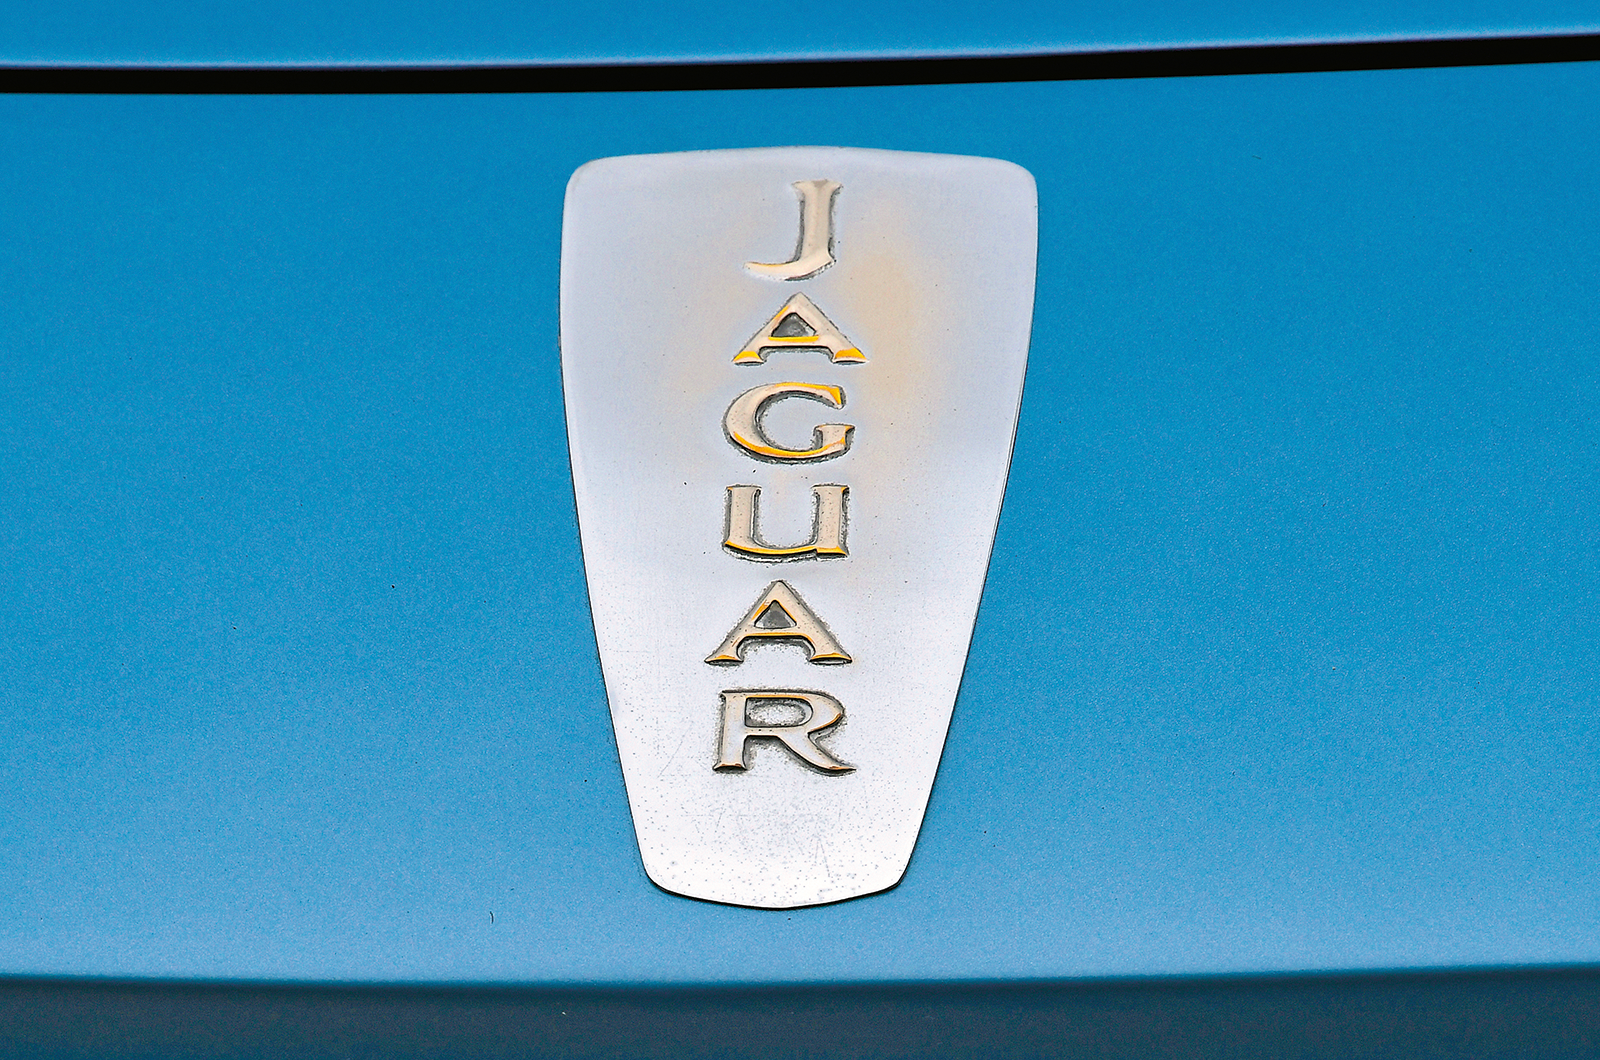 Classic & Sports Car – Shrouded in Turin: Frua’s unique Jaguar S-type